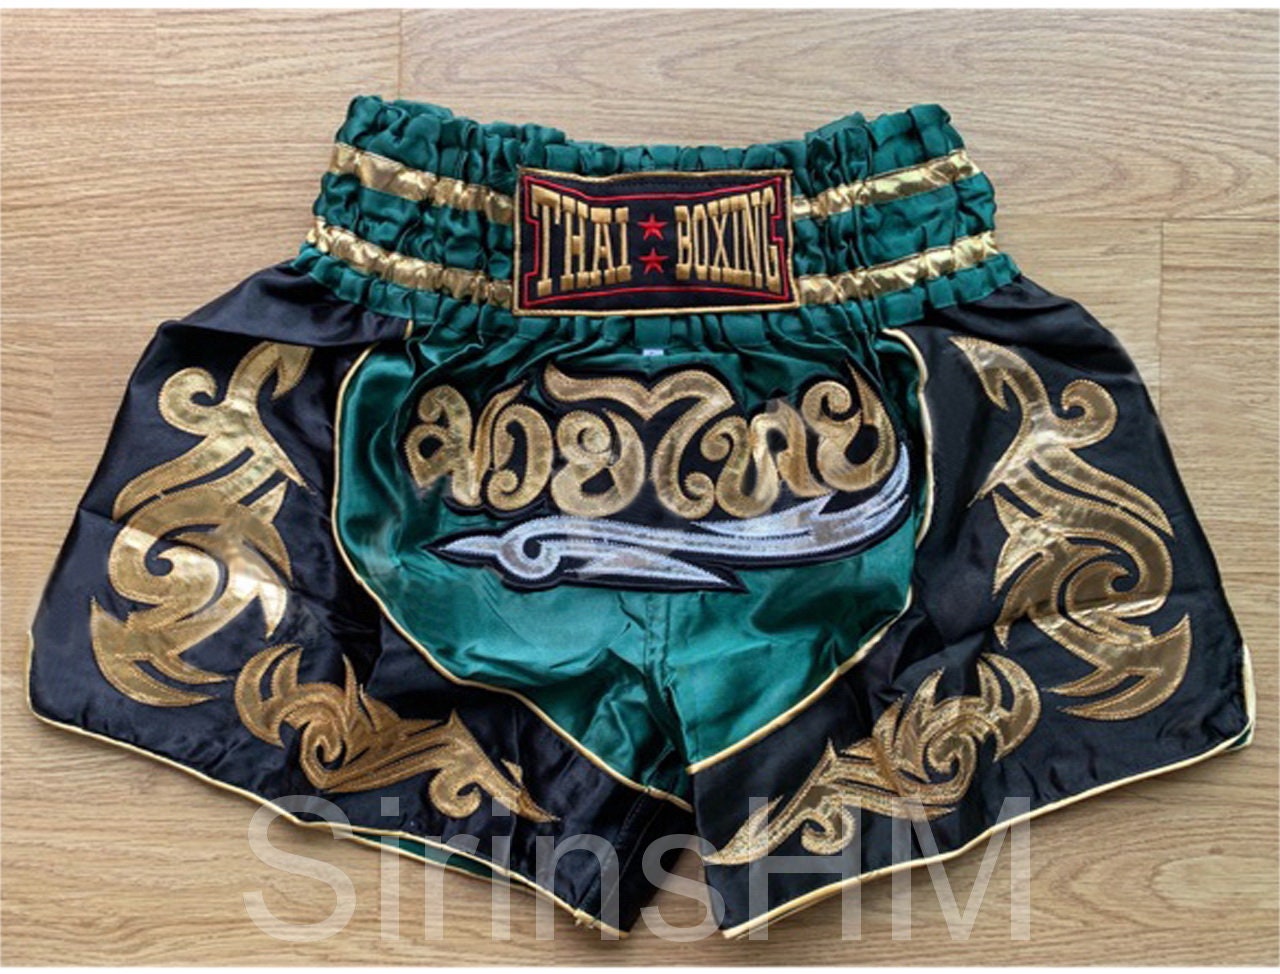 komen artillerie kam Muay Thai Boxing Shorts for Adult Green Black With Gold Thai - Etsy